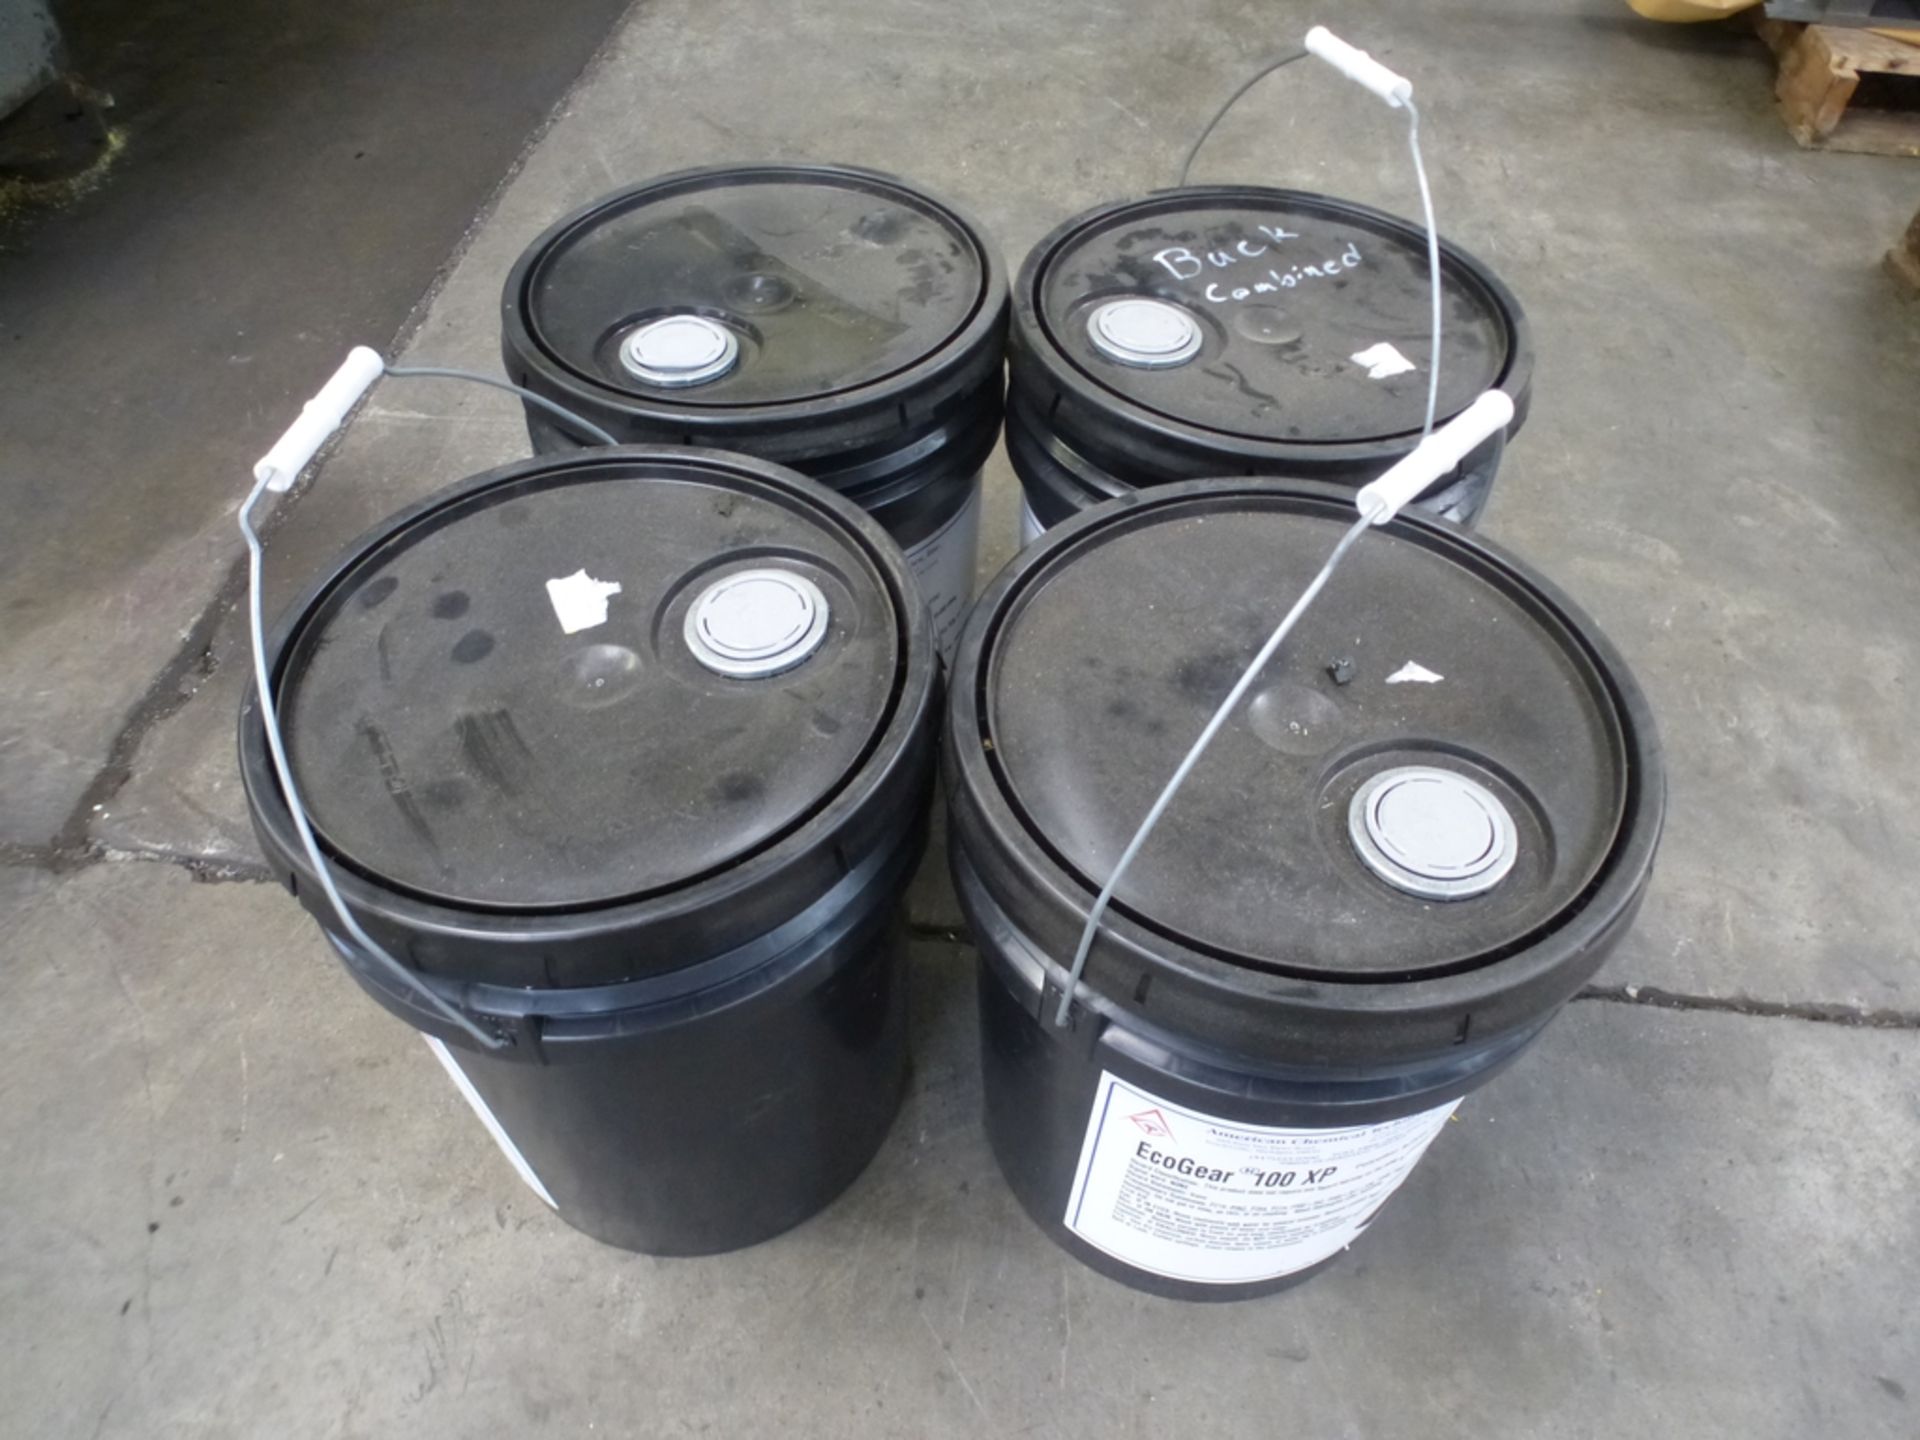 Lot of (4) 5 Gallon Buckets of Gear Oil - North Spartanburg, SC - EcoGear 100XP